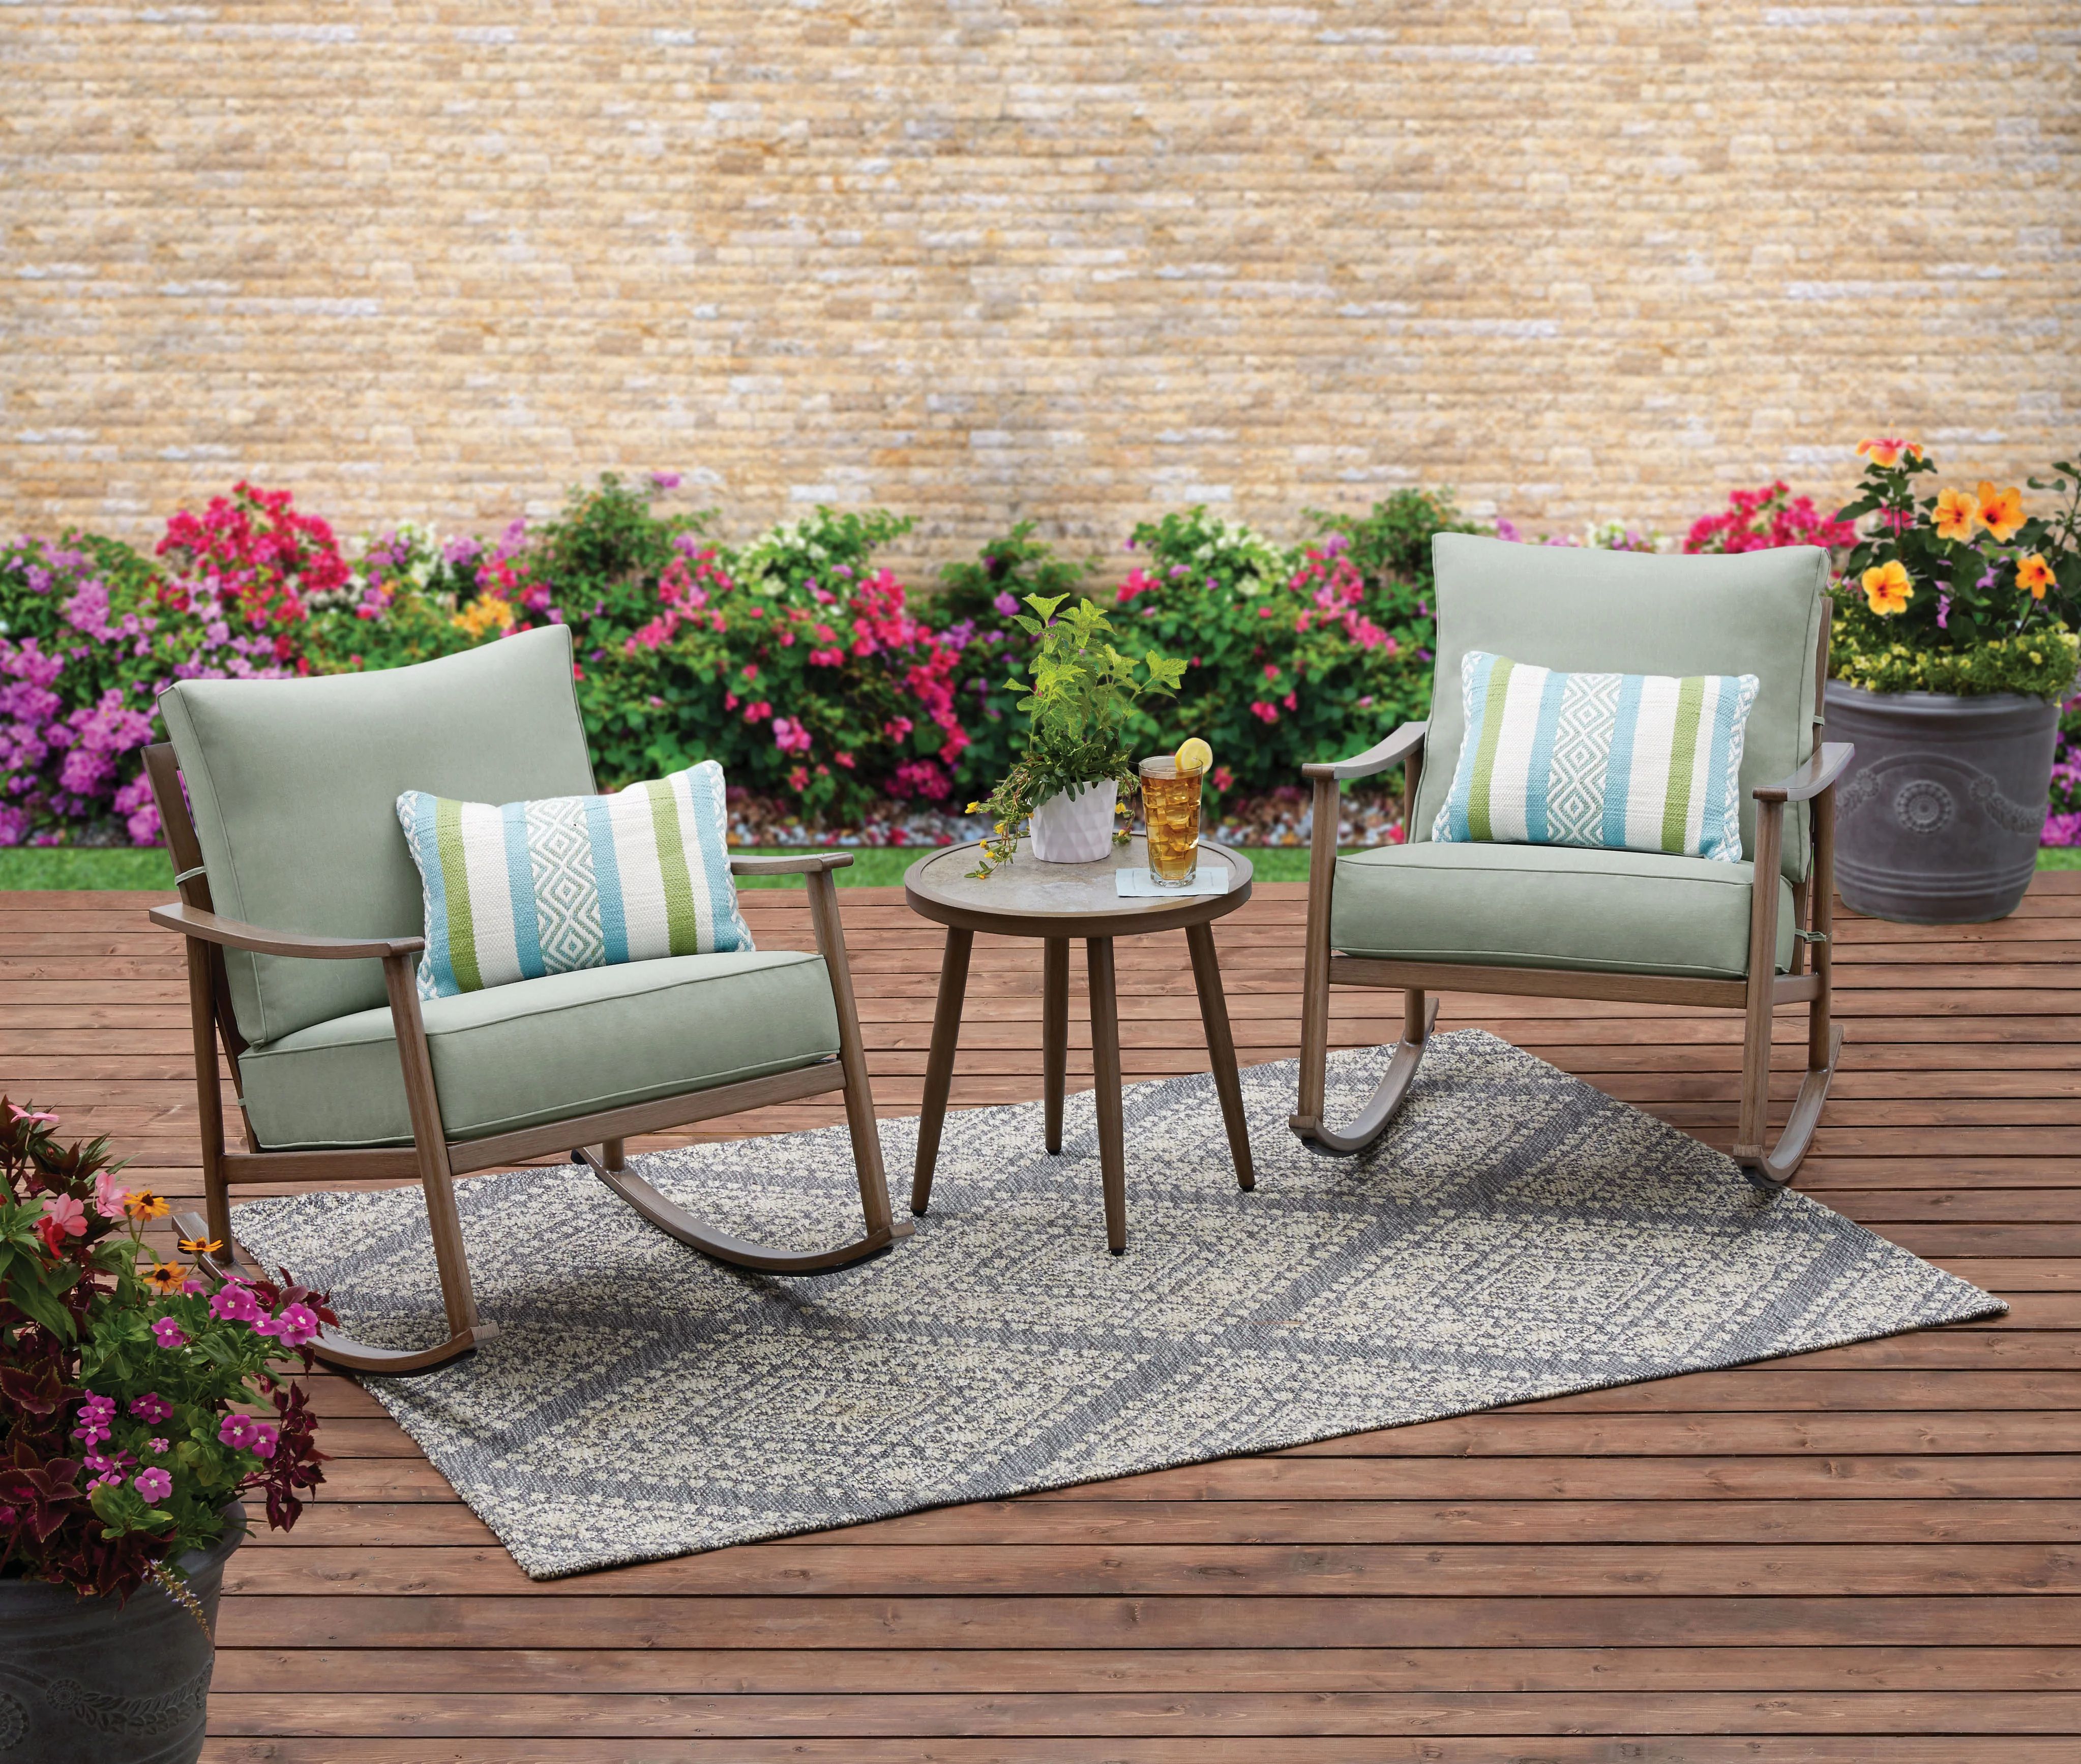 Better Homes & Gardens Roxbury 3 Piece Cushion Rocking Chair Set | Walmart (US)